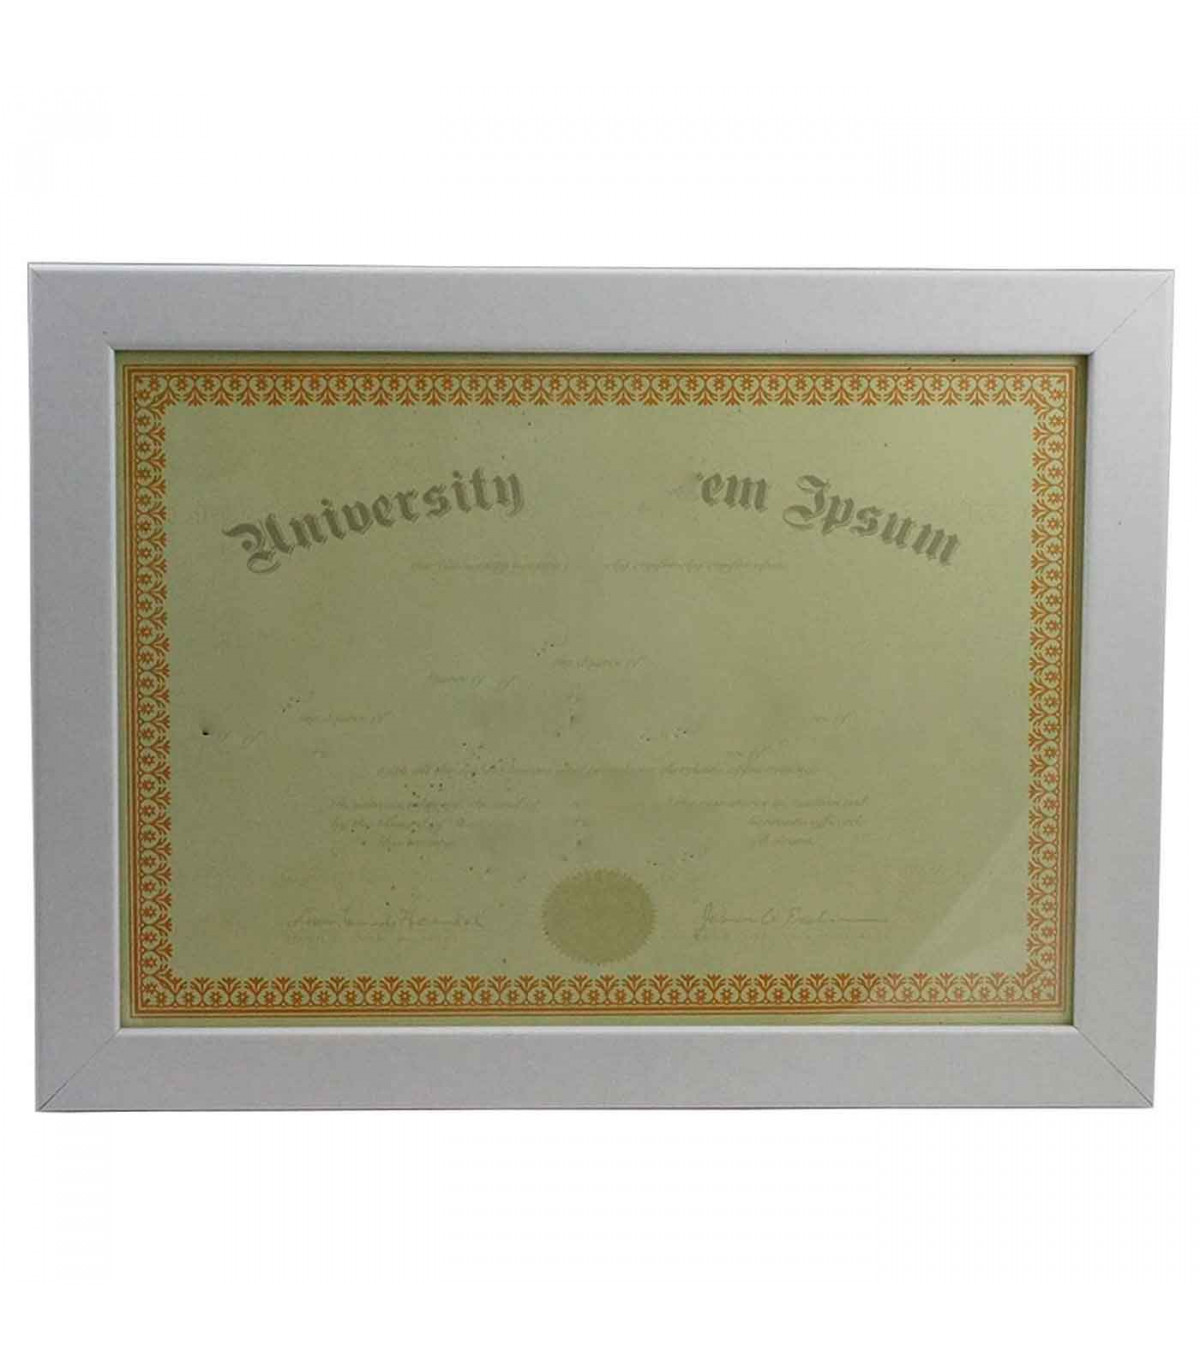 Marco para Diploma Fragments Horizontal Madera 27.9 x 21.6 cm Café